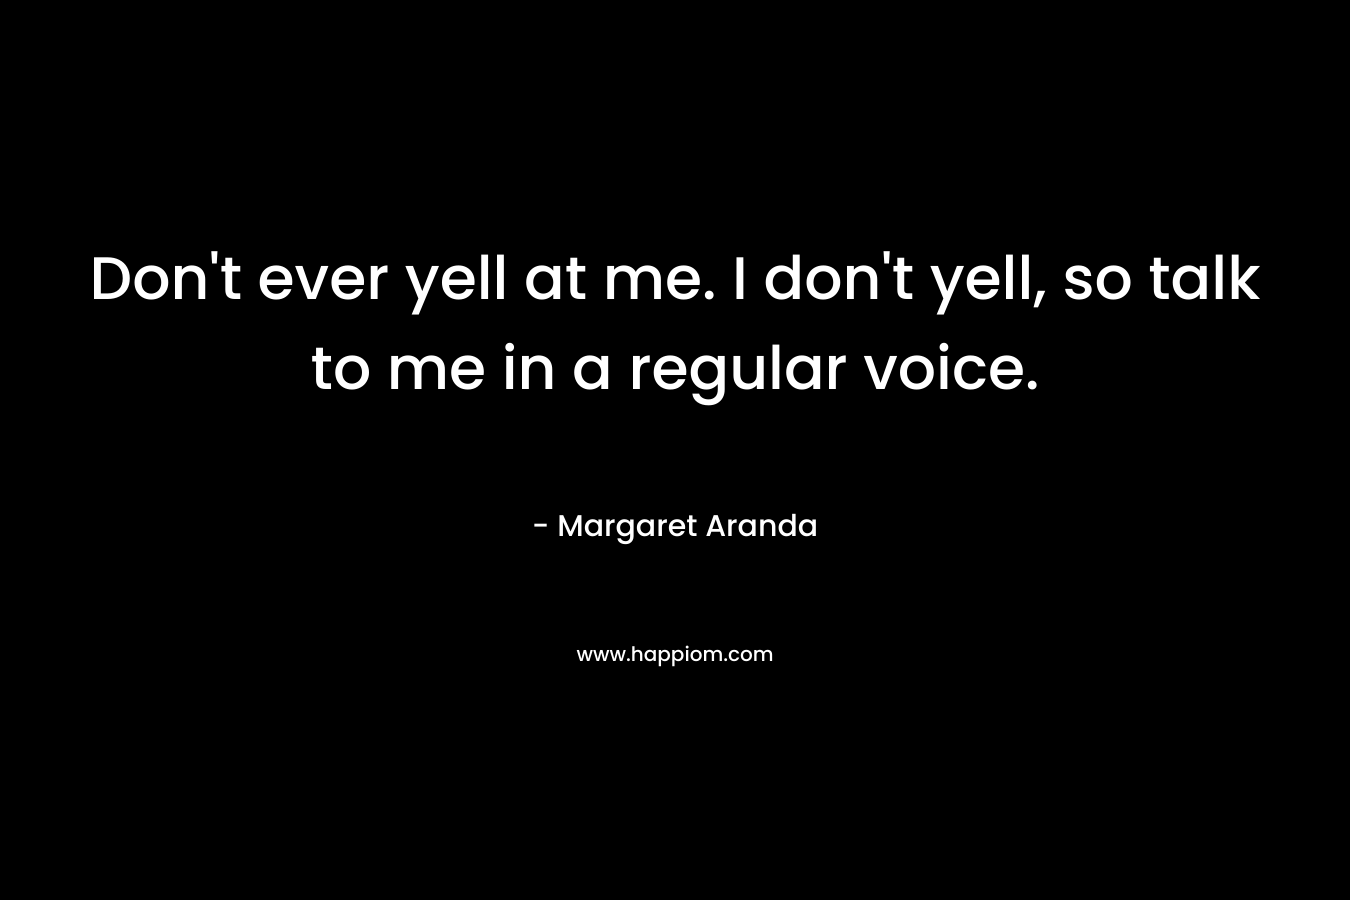 Don't ever yell at me. I don't yell, so talk to me in a regular voice.